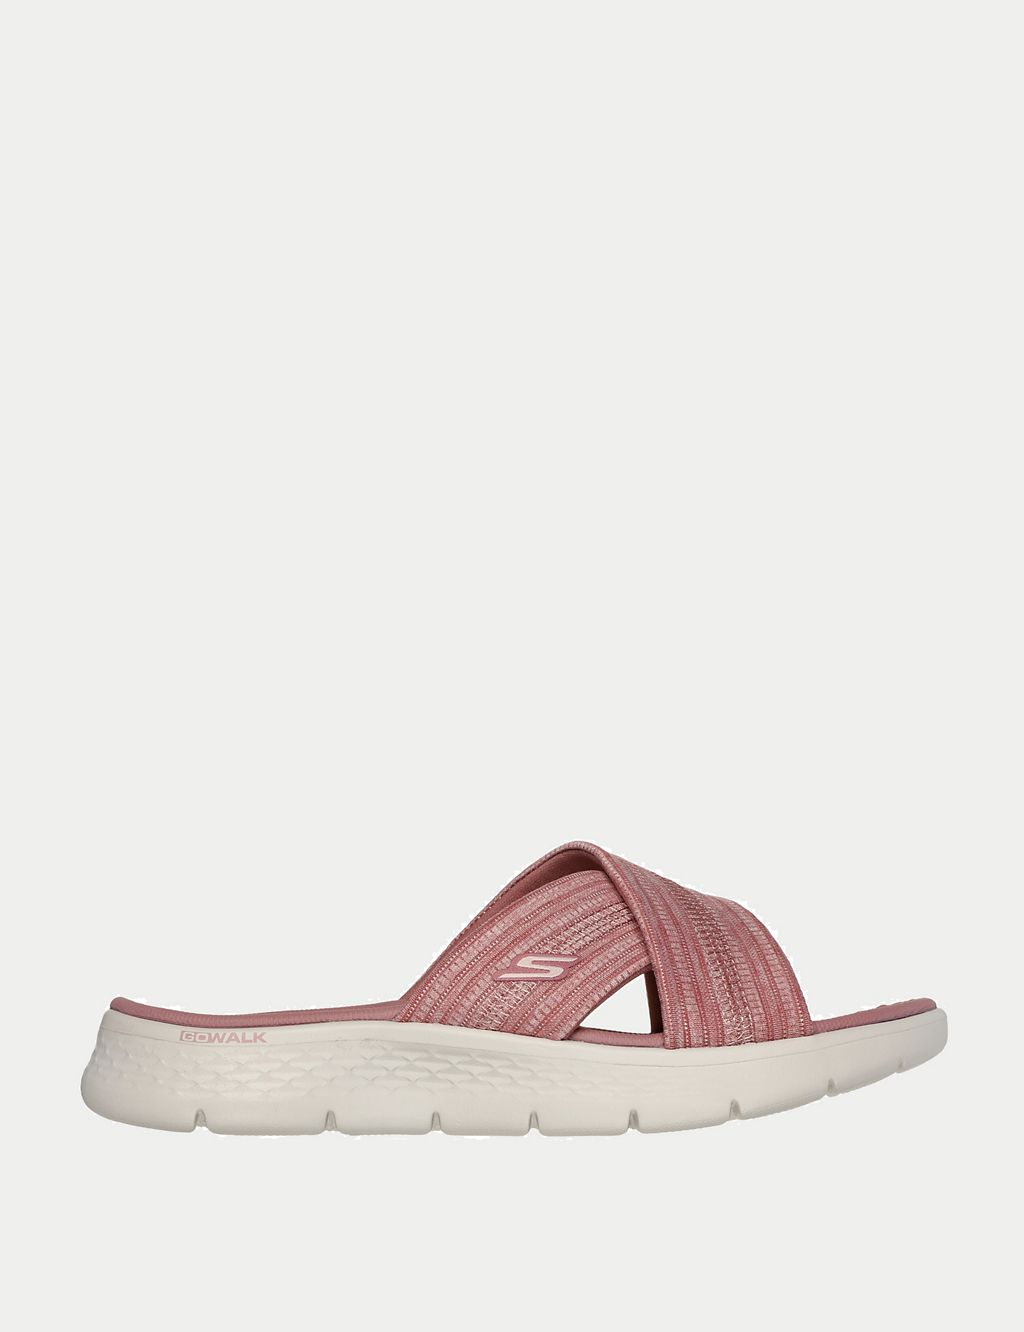 GO WALK® Flex Flat Sandals 3 of 5